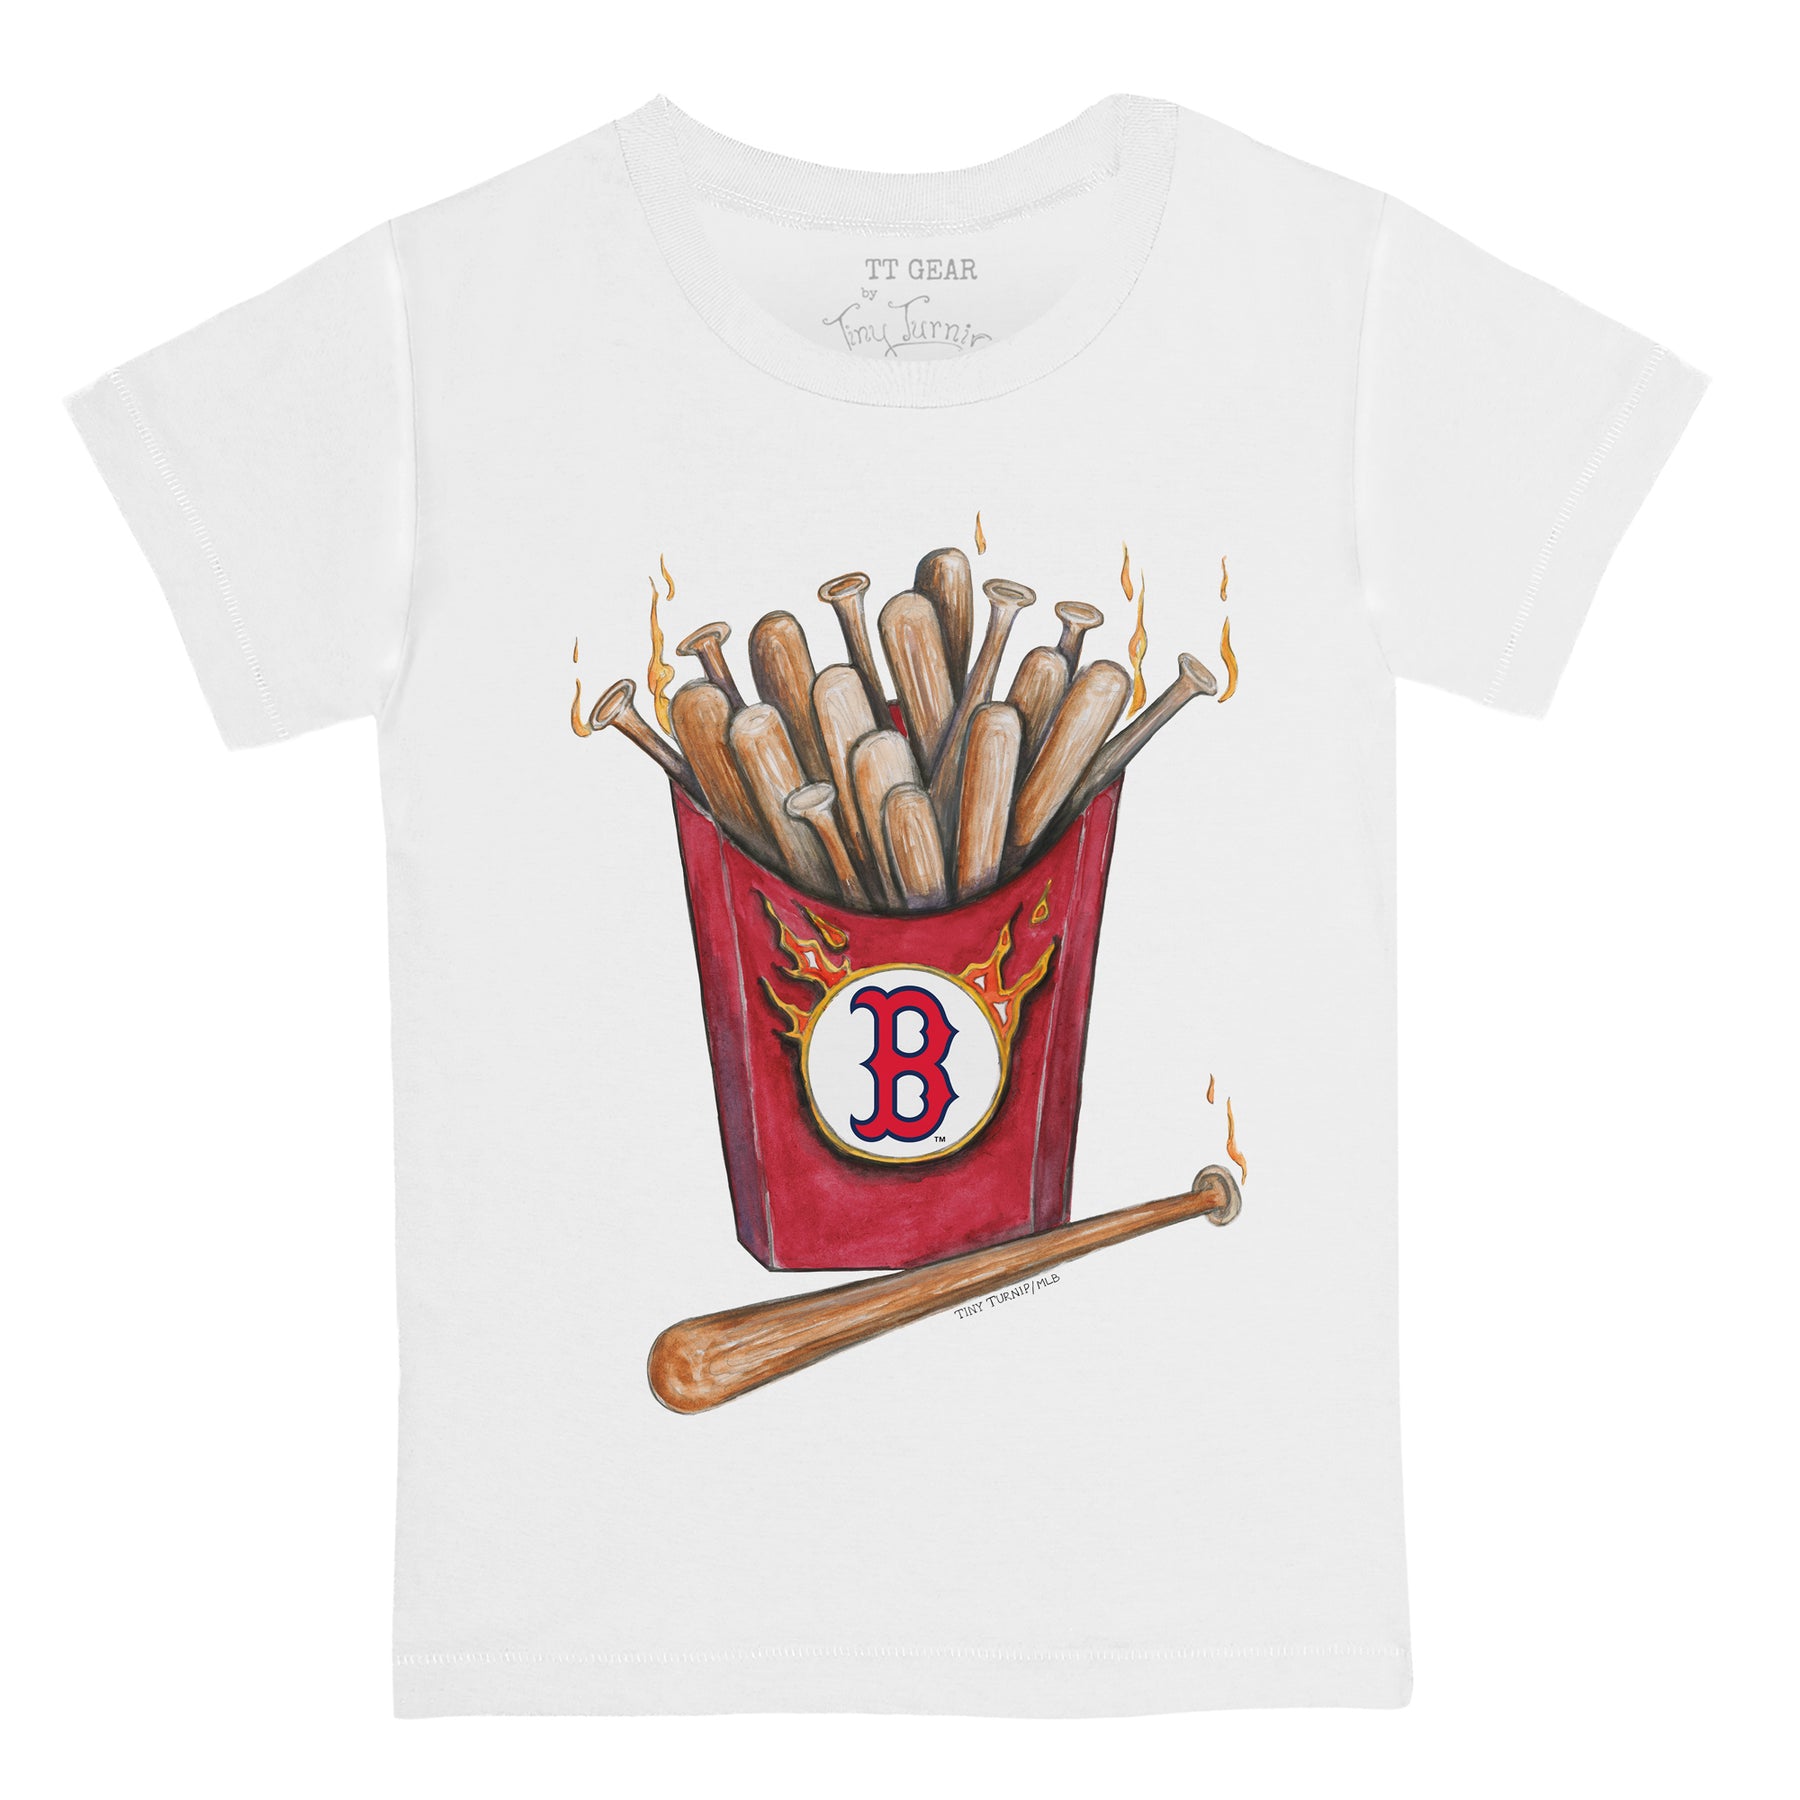 Boston Red Sox Hot Bats Tee Shirt